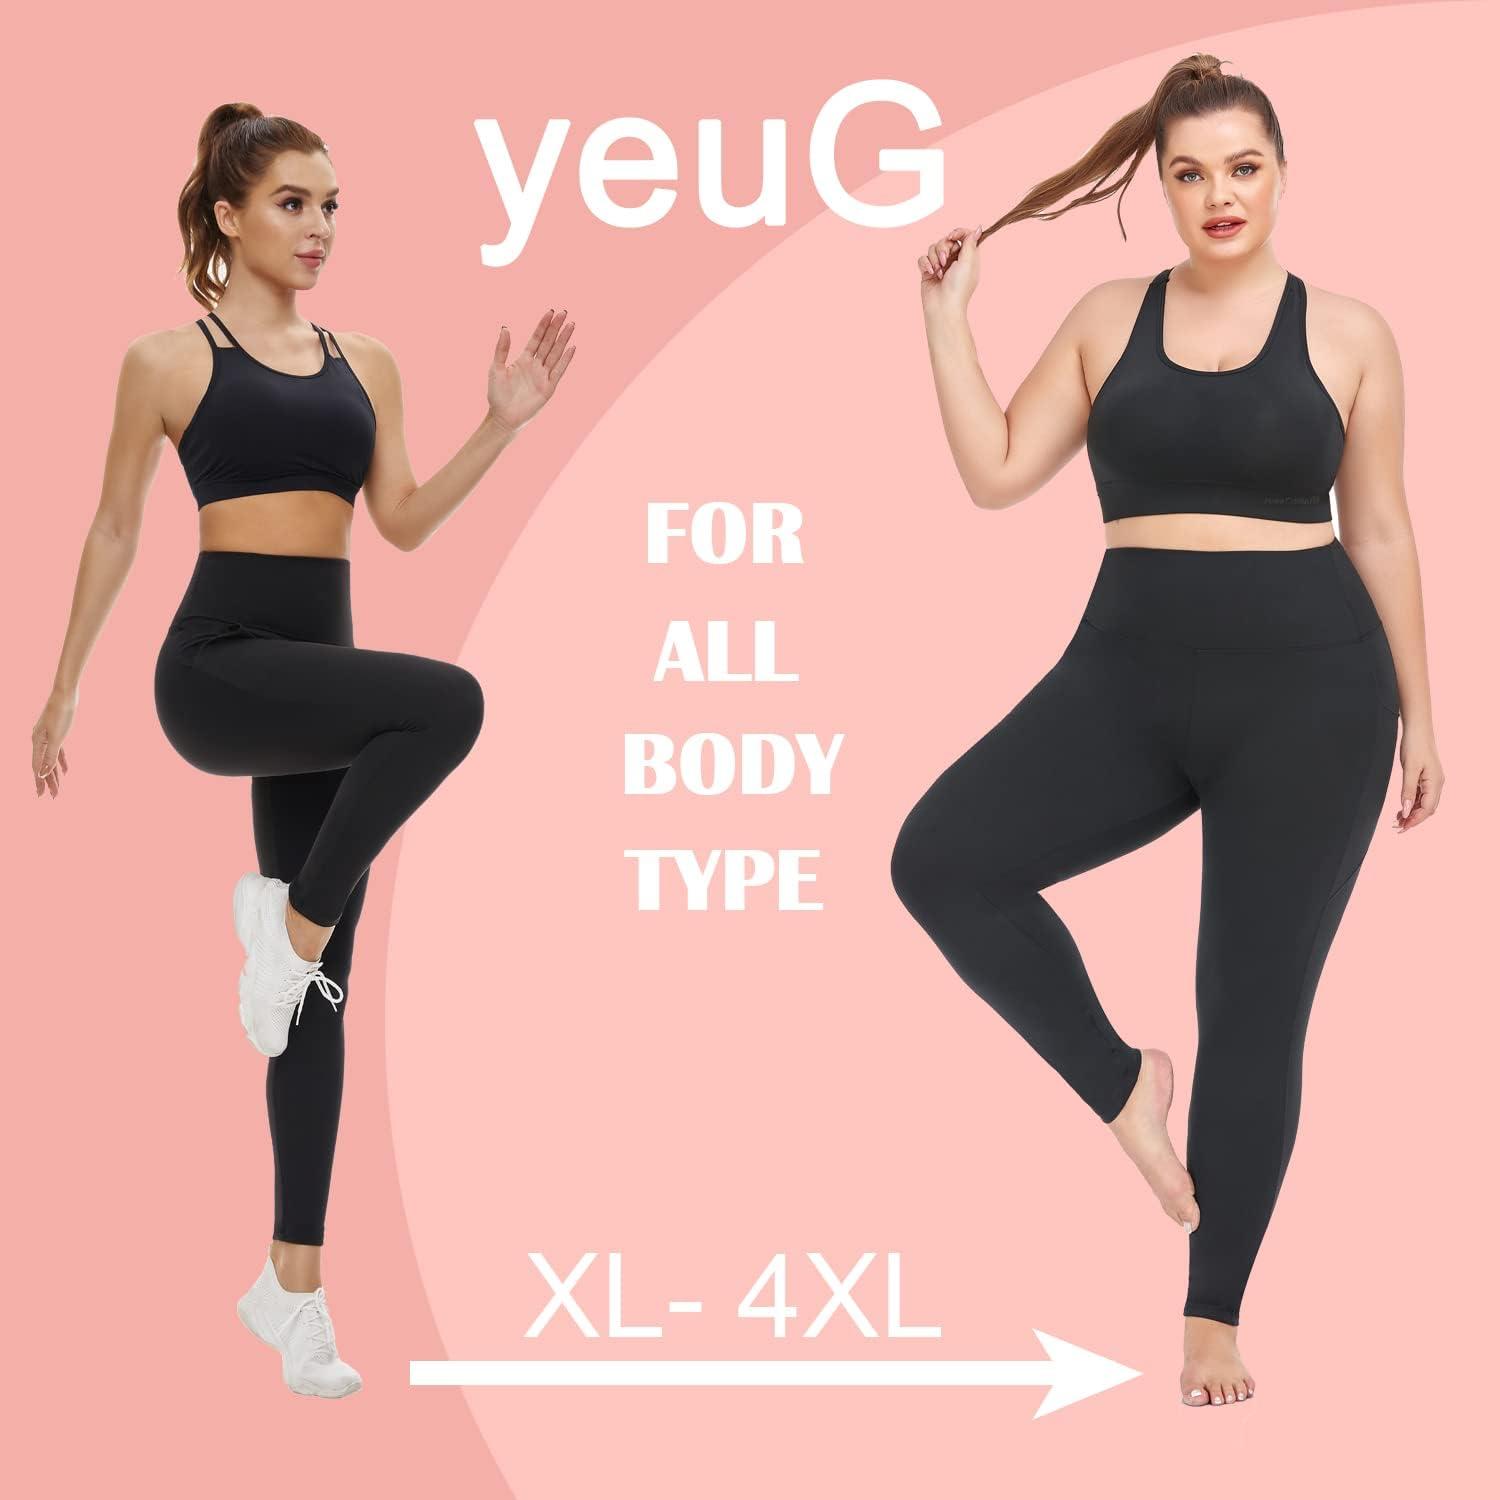 yeuG Plus Size Leggings for Women-Stretchy X-Large-4X Tummy Control High  Waist Spandex Workout Black Yoga Pants(Black,Plum Purple(Long